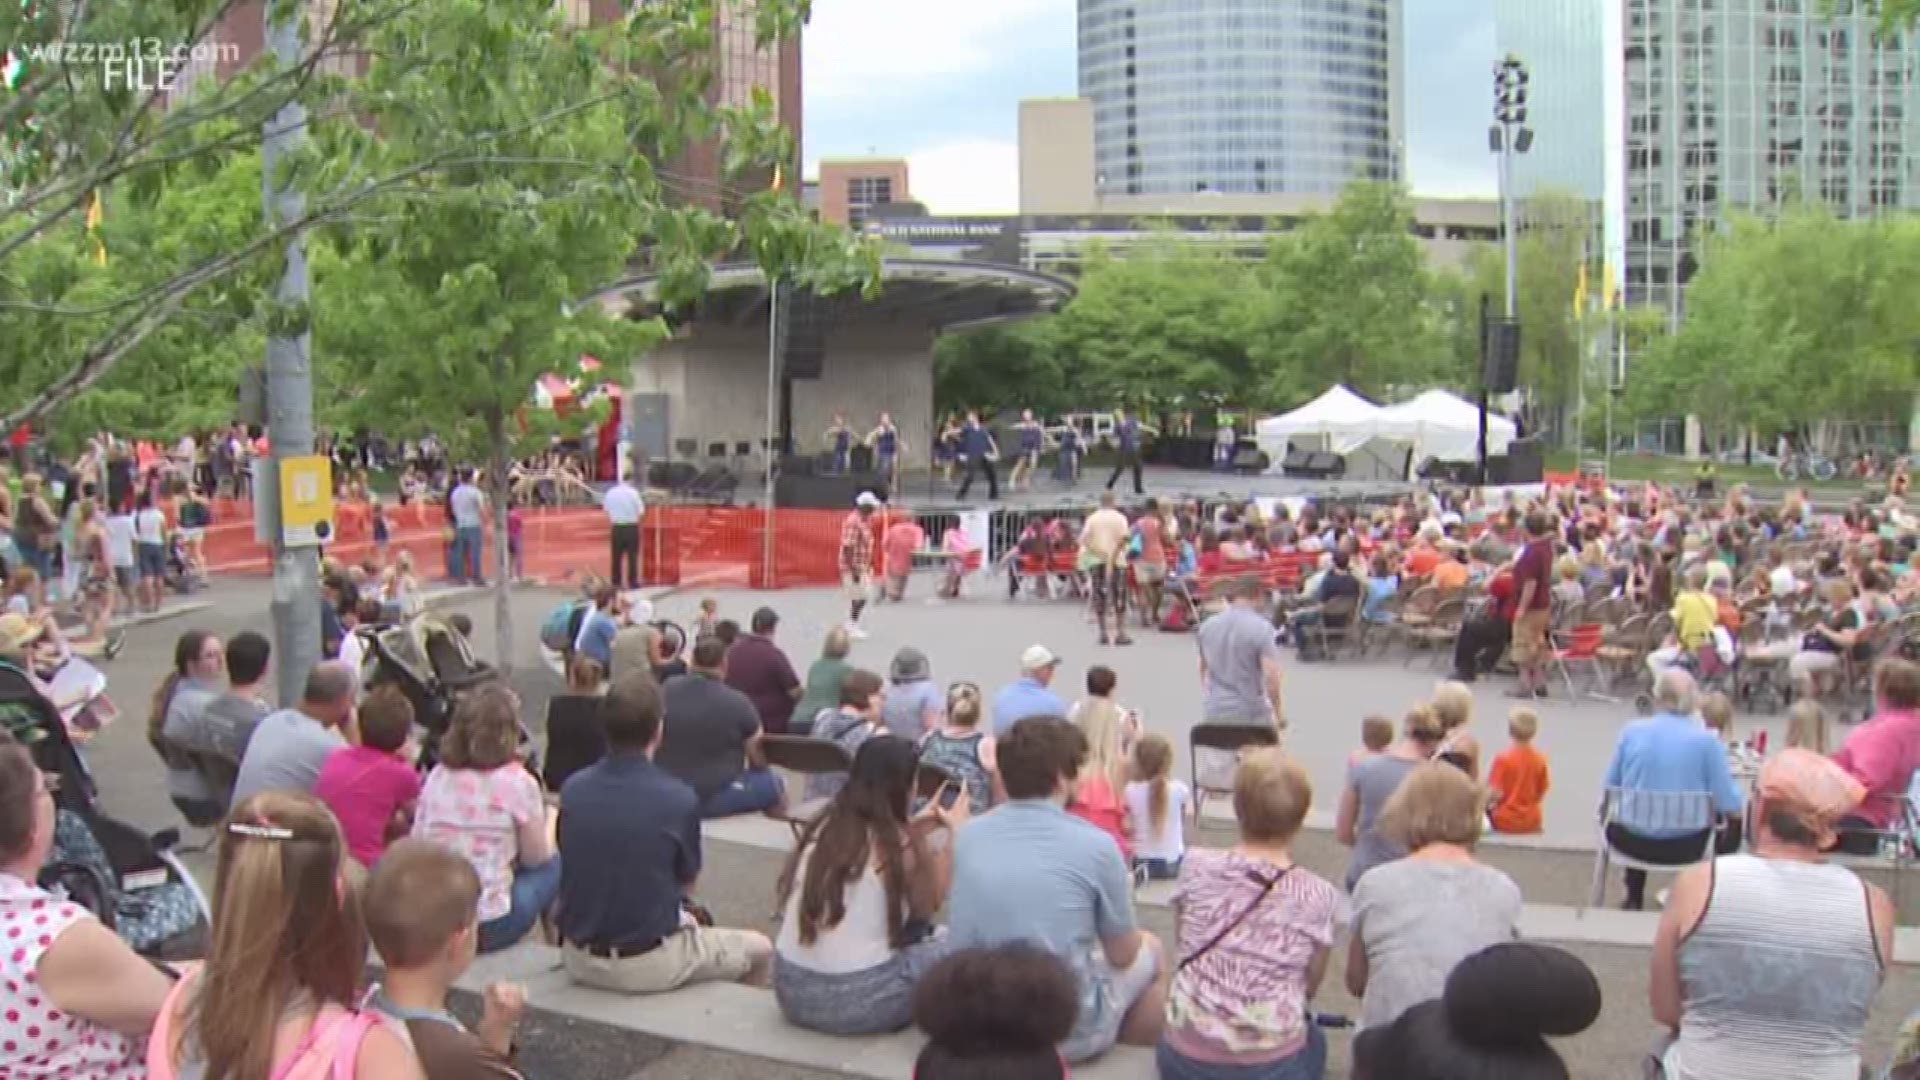 49th Festival of the Arts kicks off in Grand Rapids